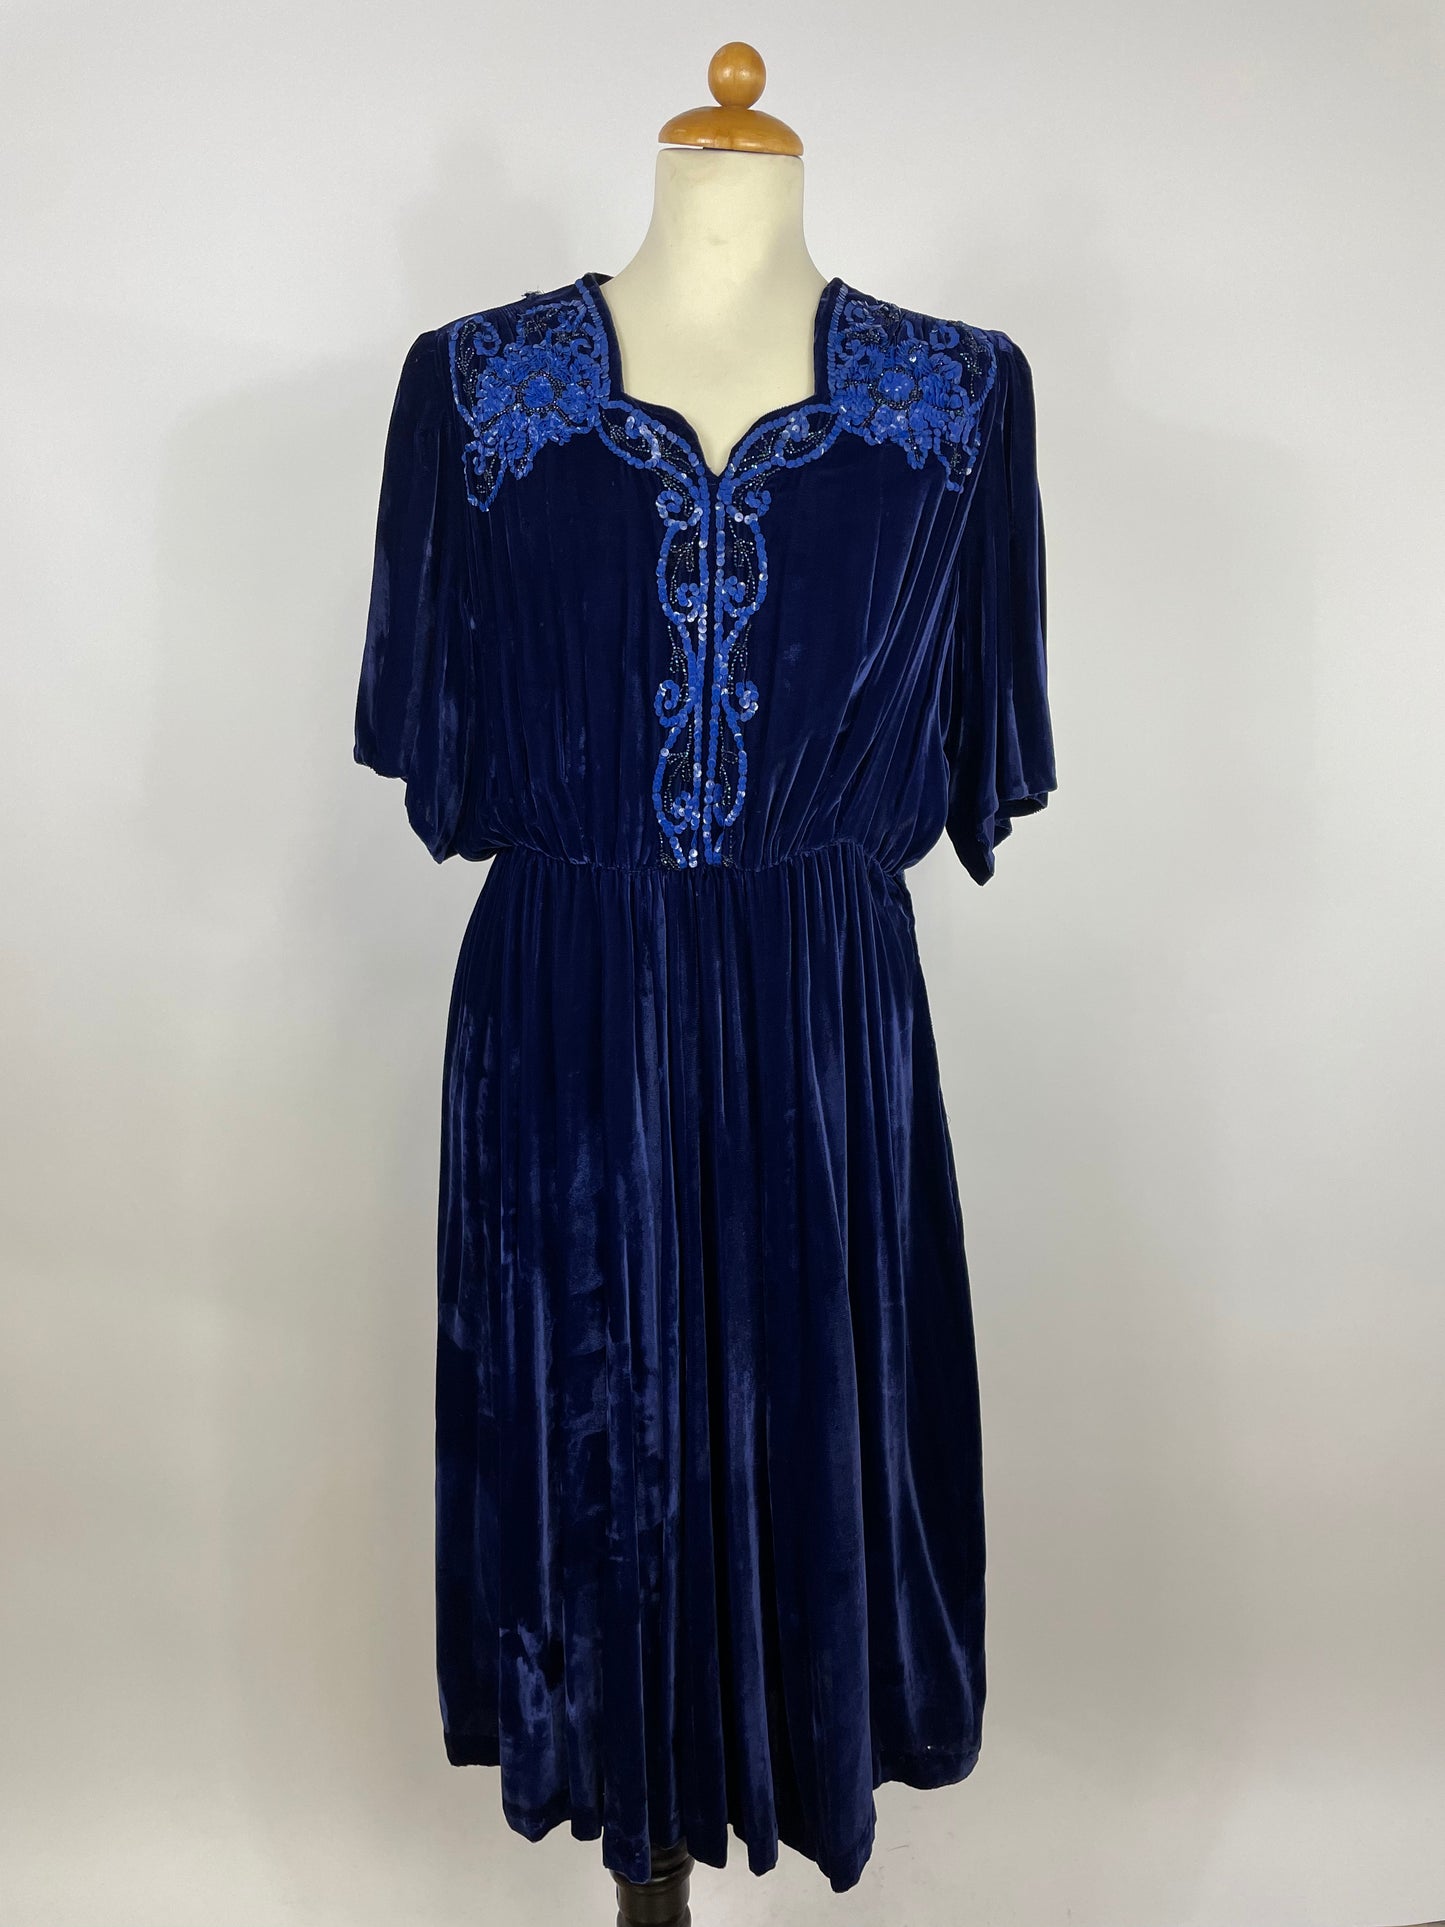 Authentic 1930s dress